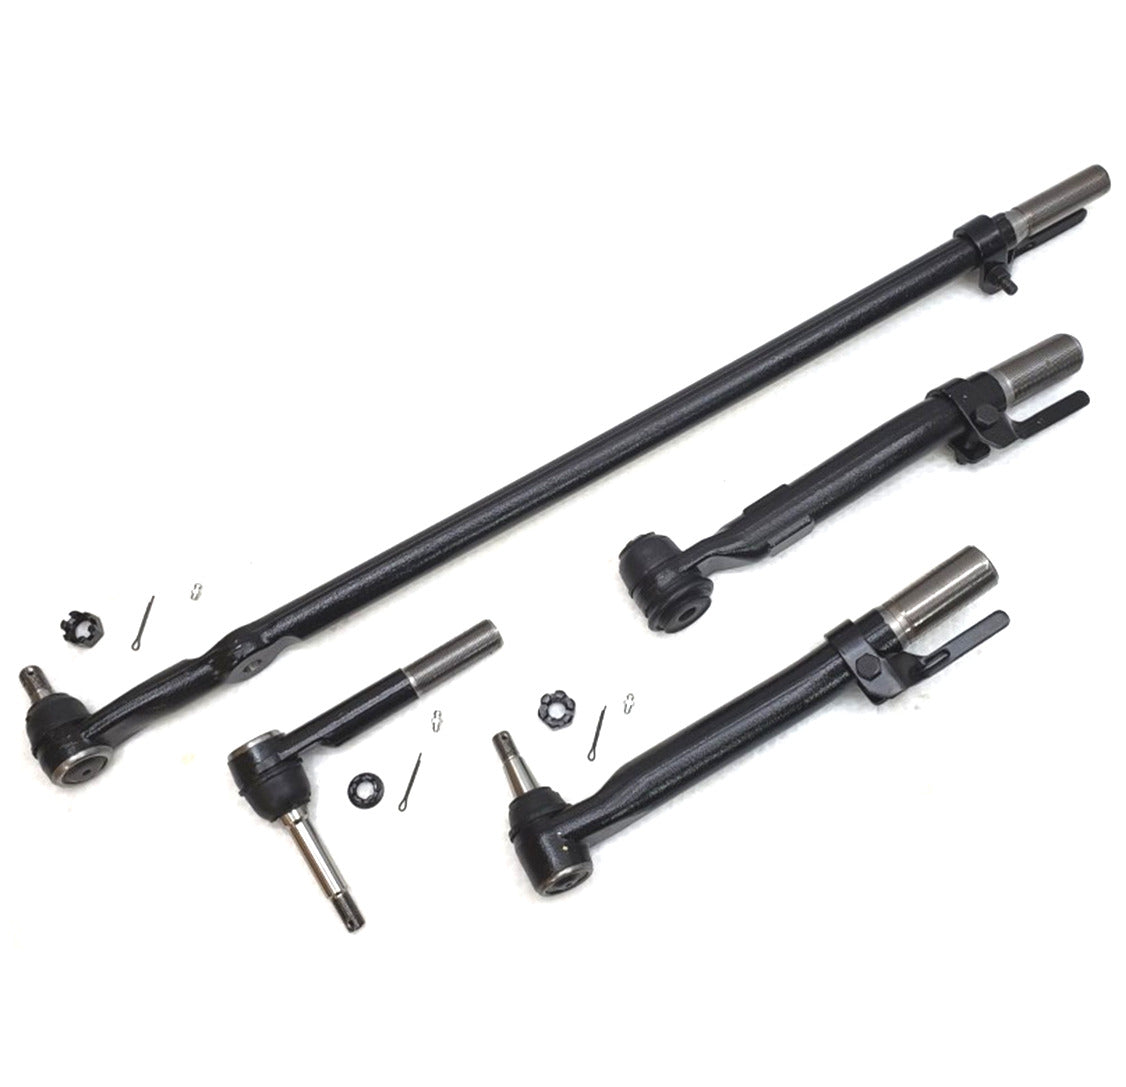 Lifetime Drag Link Tie Rod Steering Kit for 2011-2019 Ford F450, F550 Super Duty